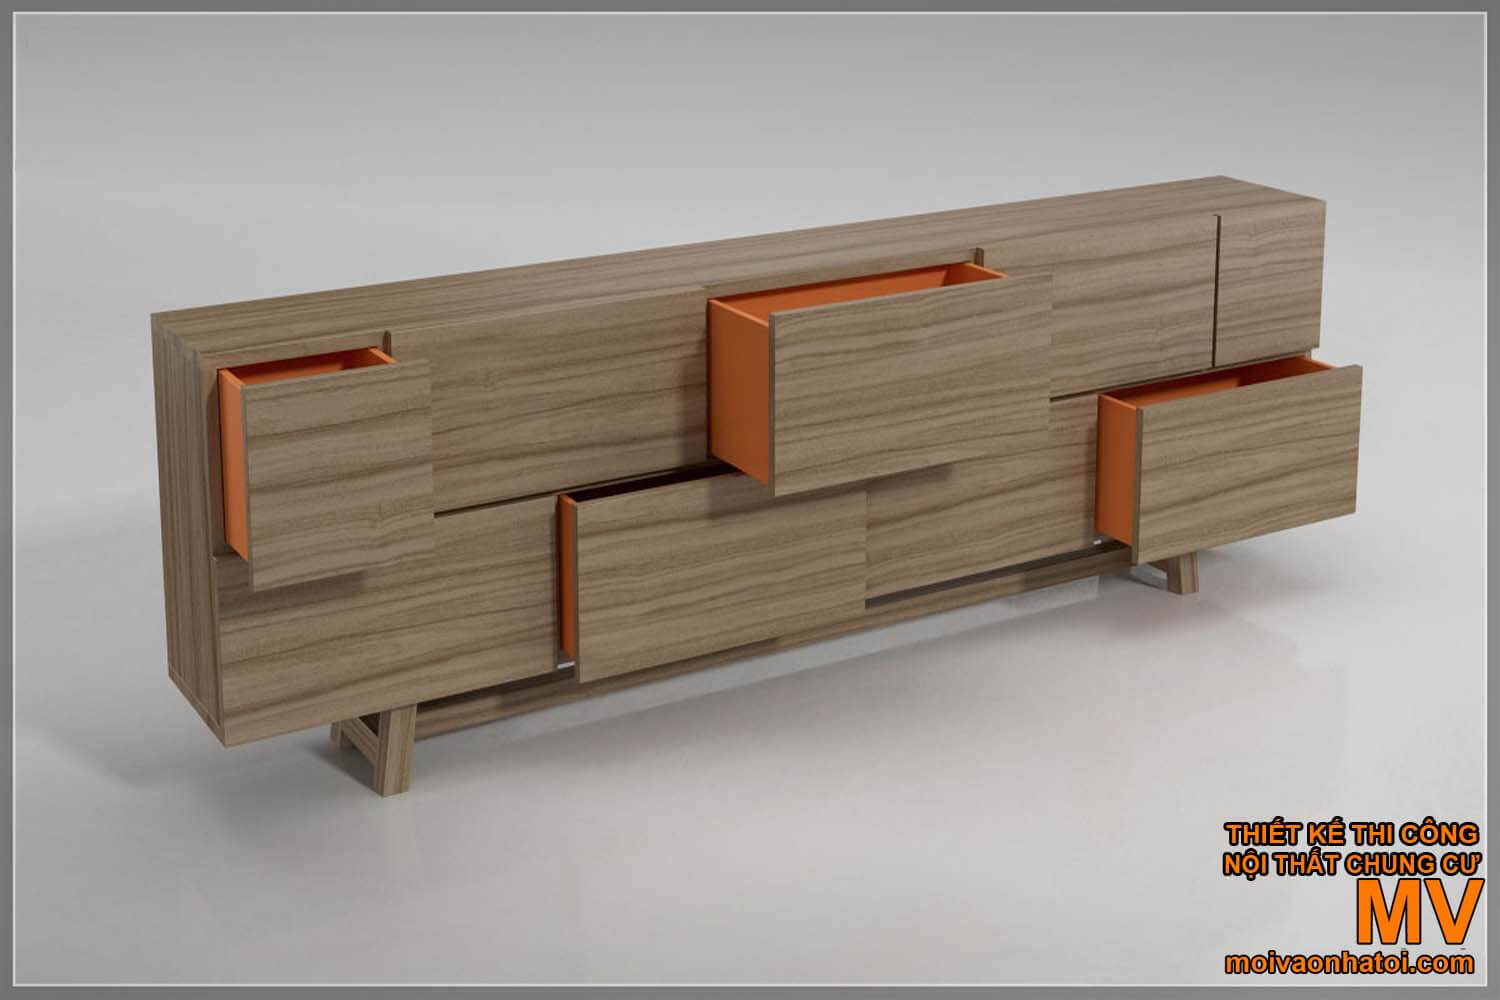 Beautiful wooden TV shelf